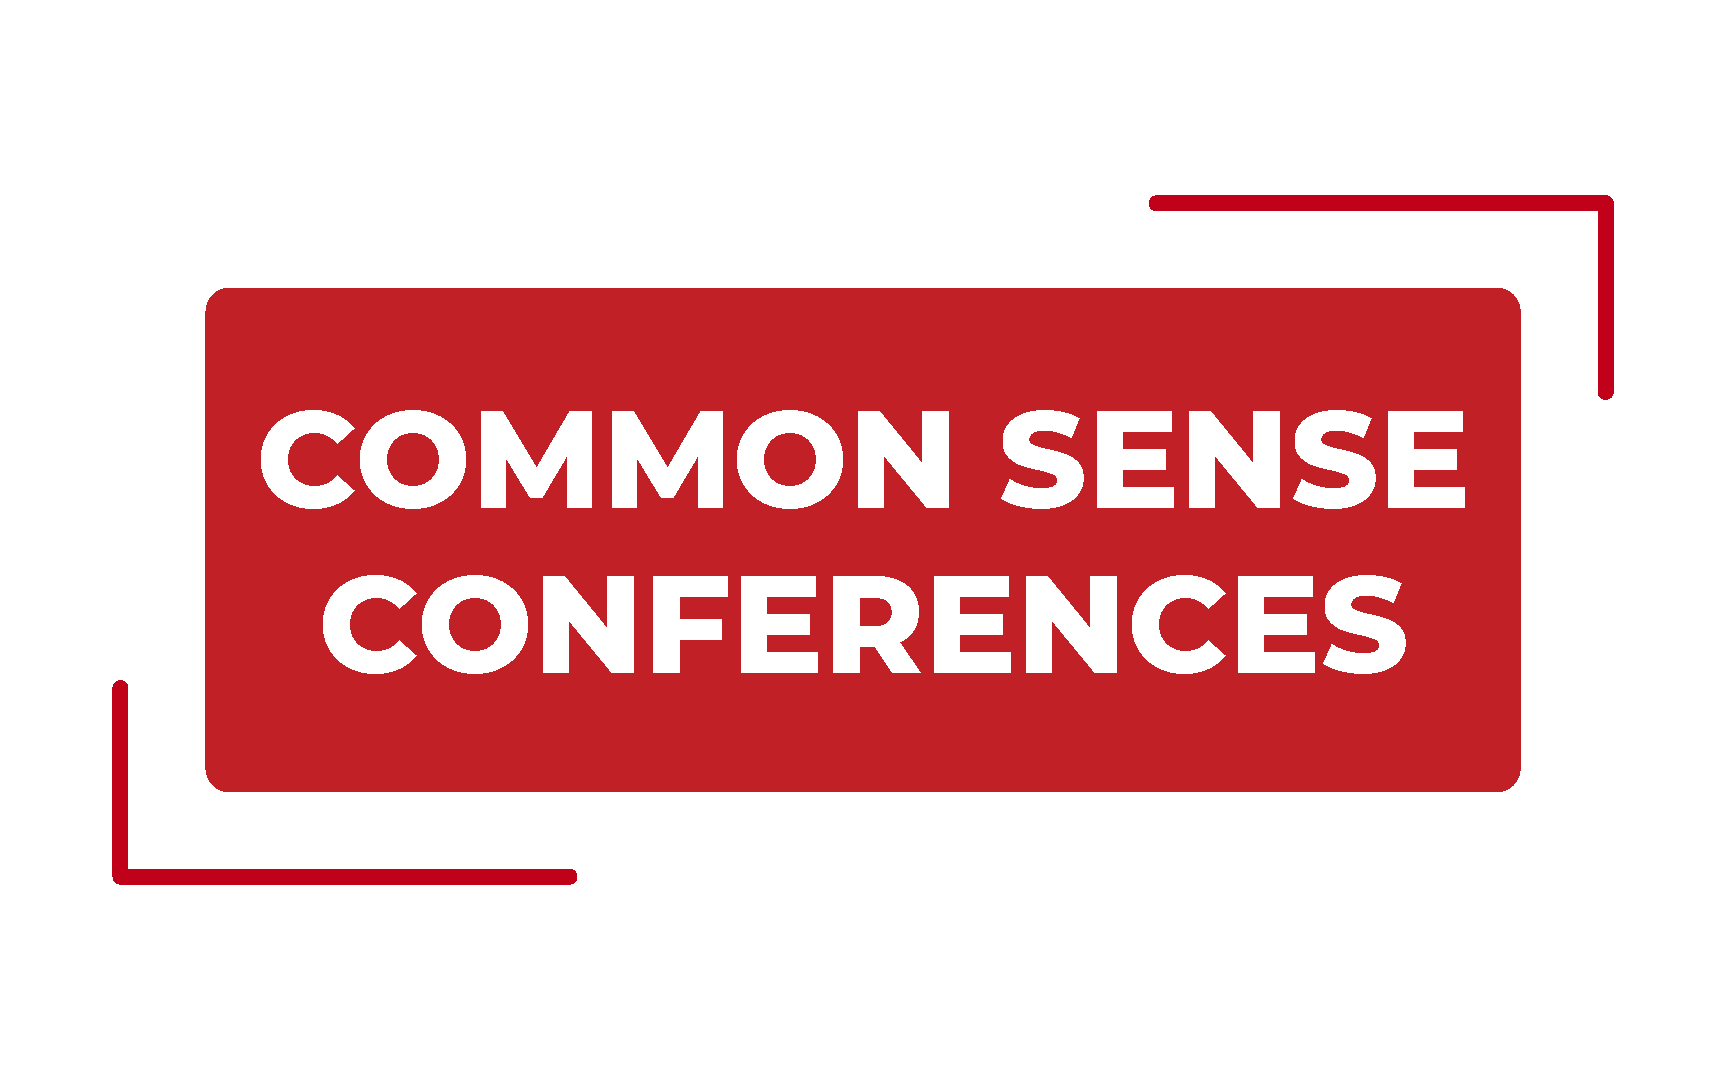 Common Sense Conferences | High value conferences for innovators